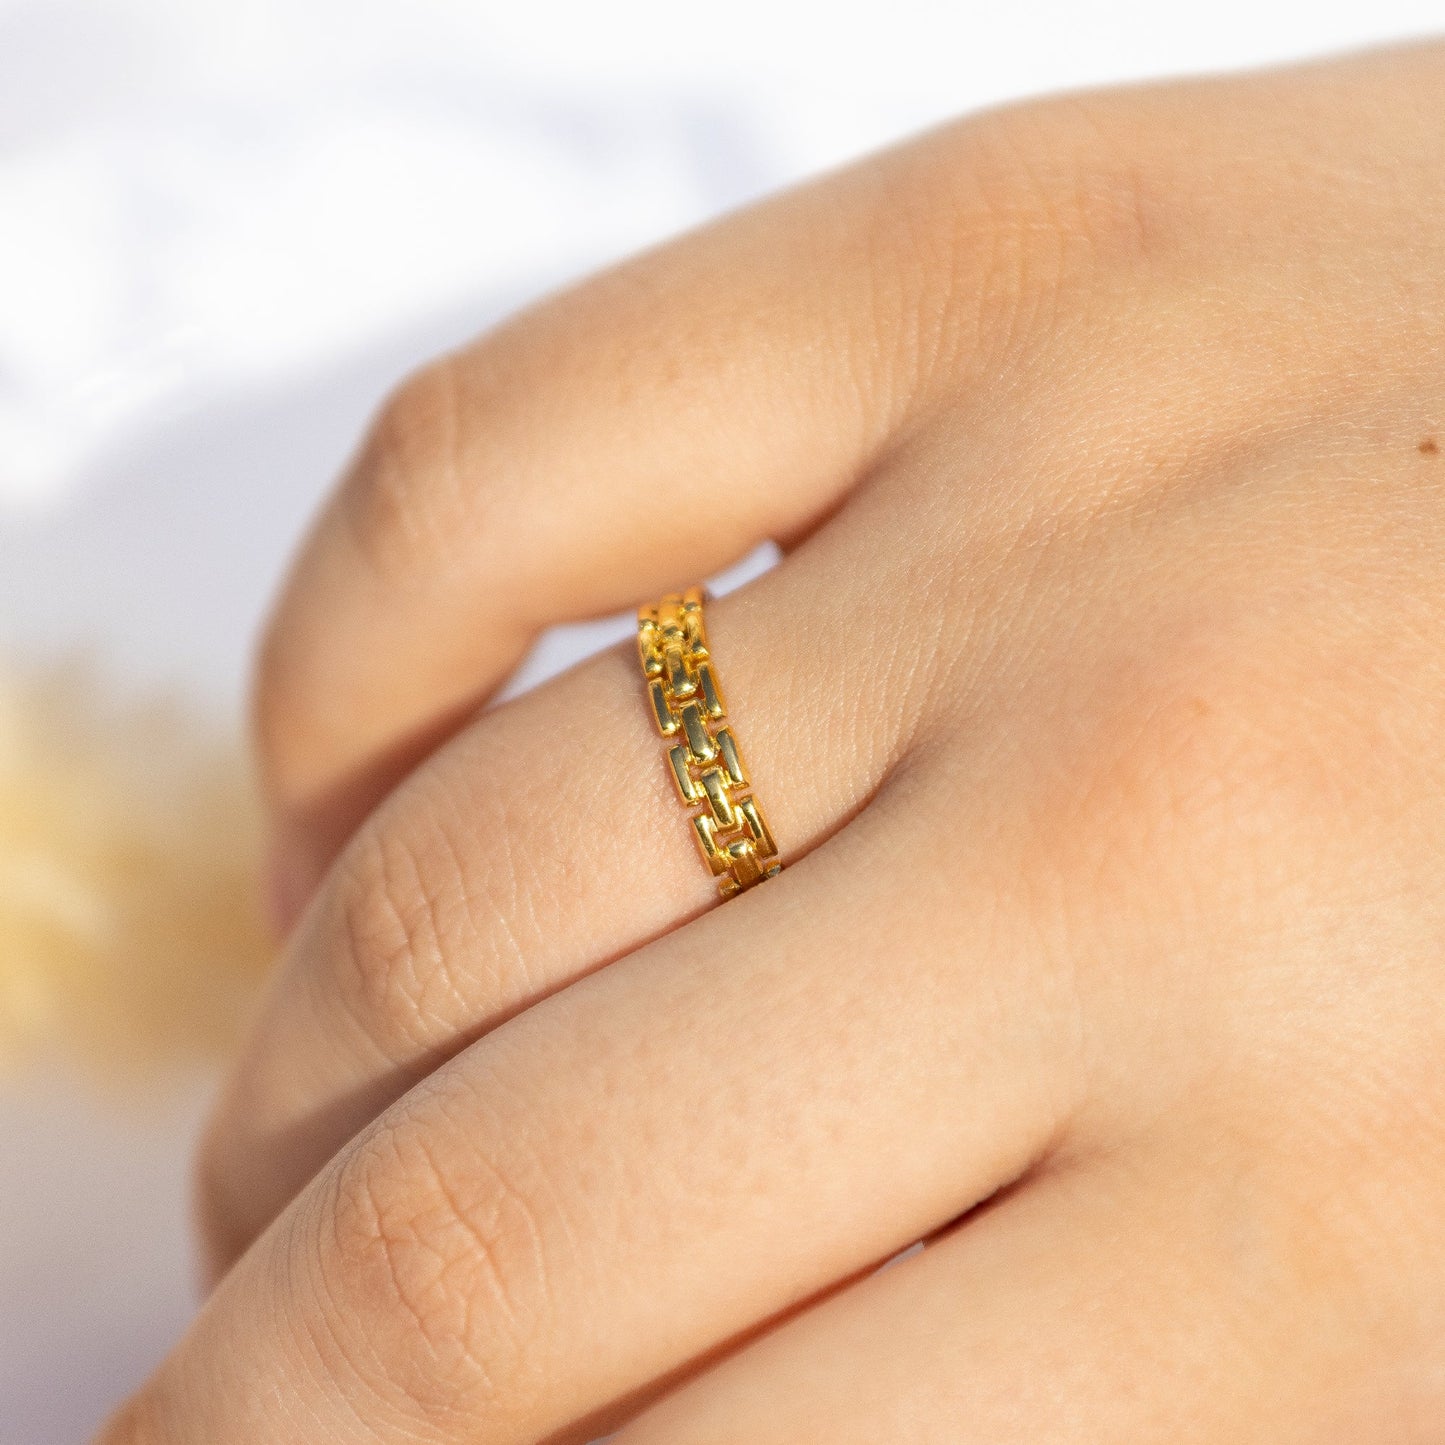 18k vergoldeter Ring Vintage Style Verstellbar - NONOSH